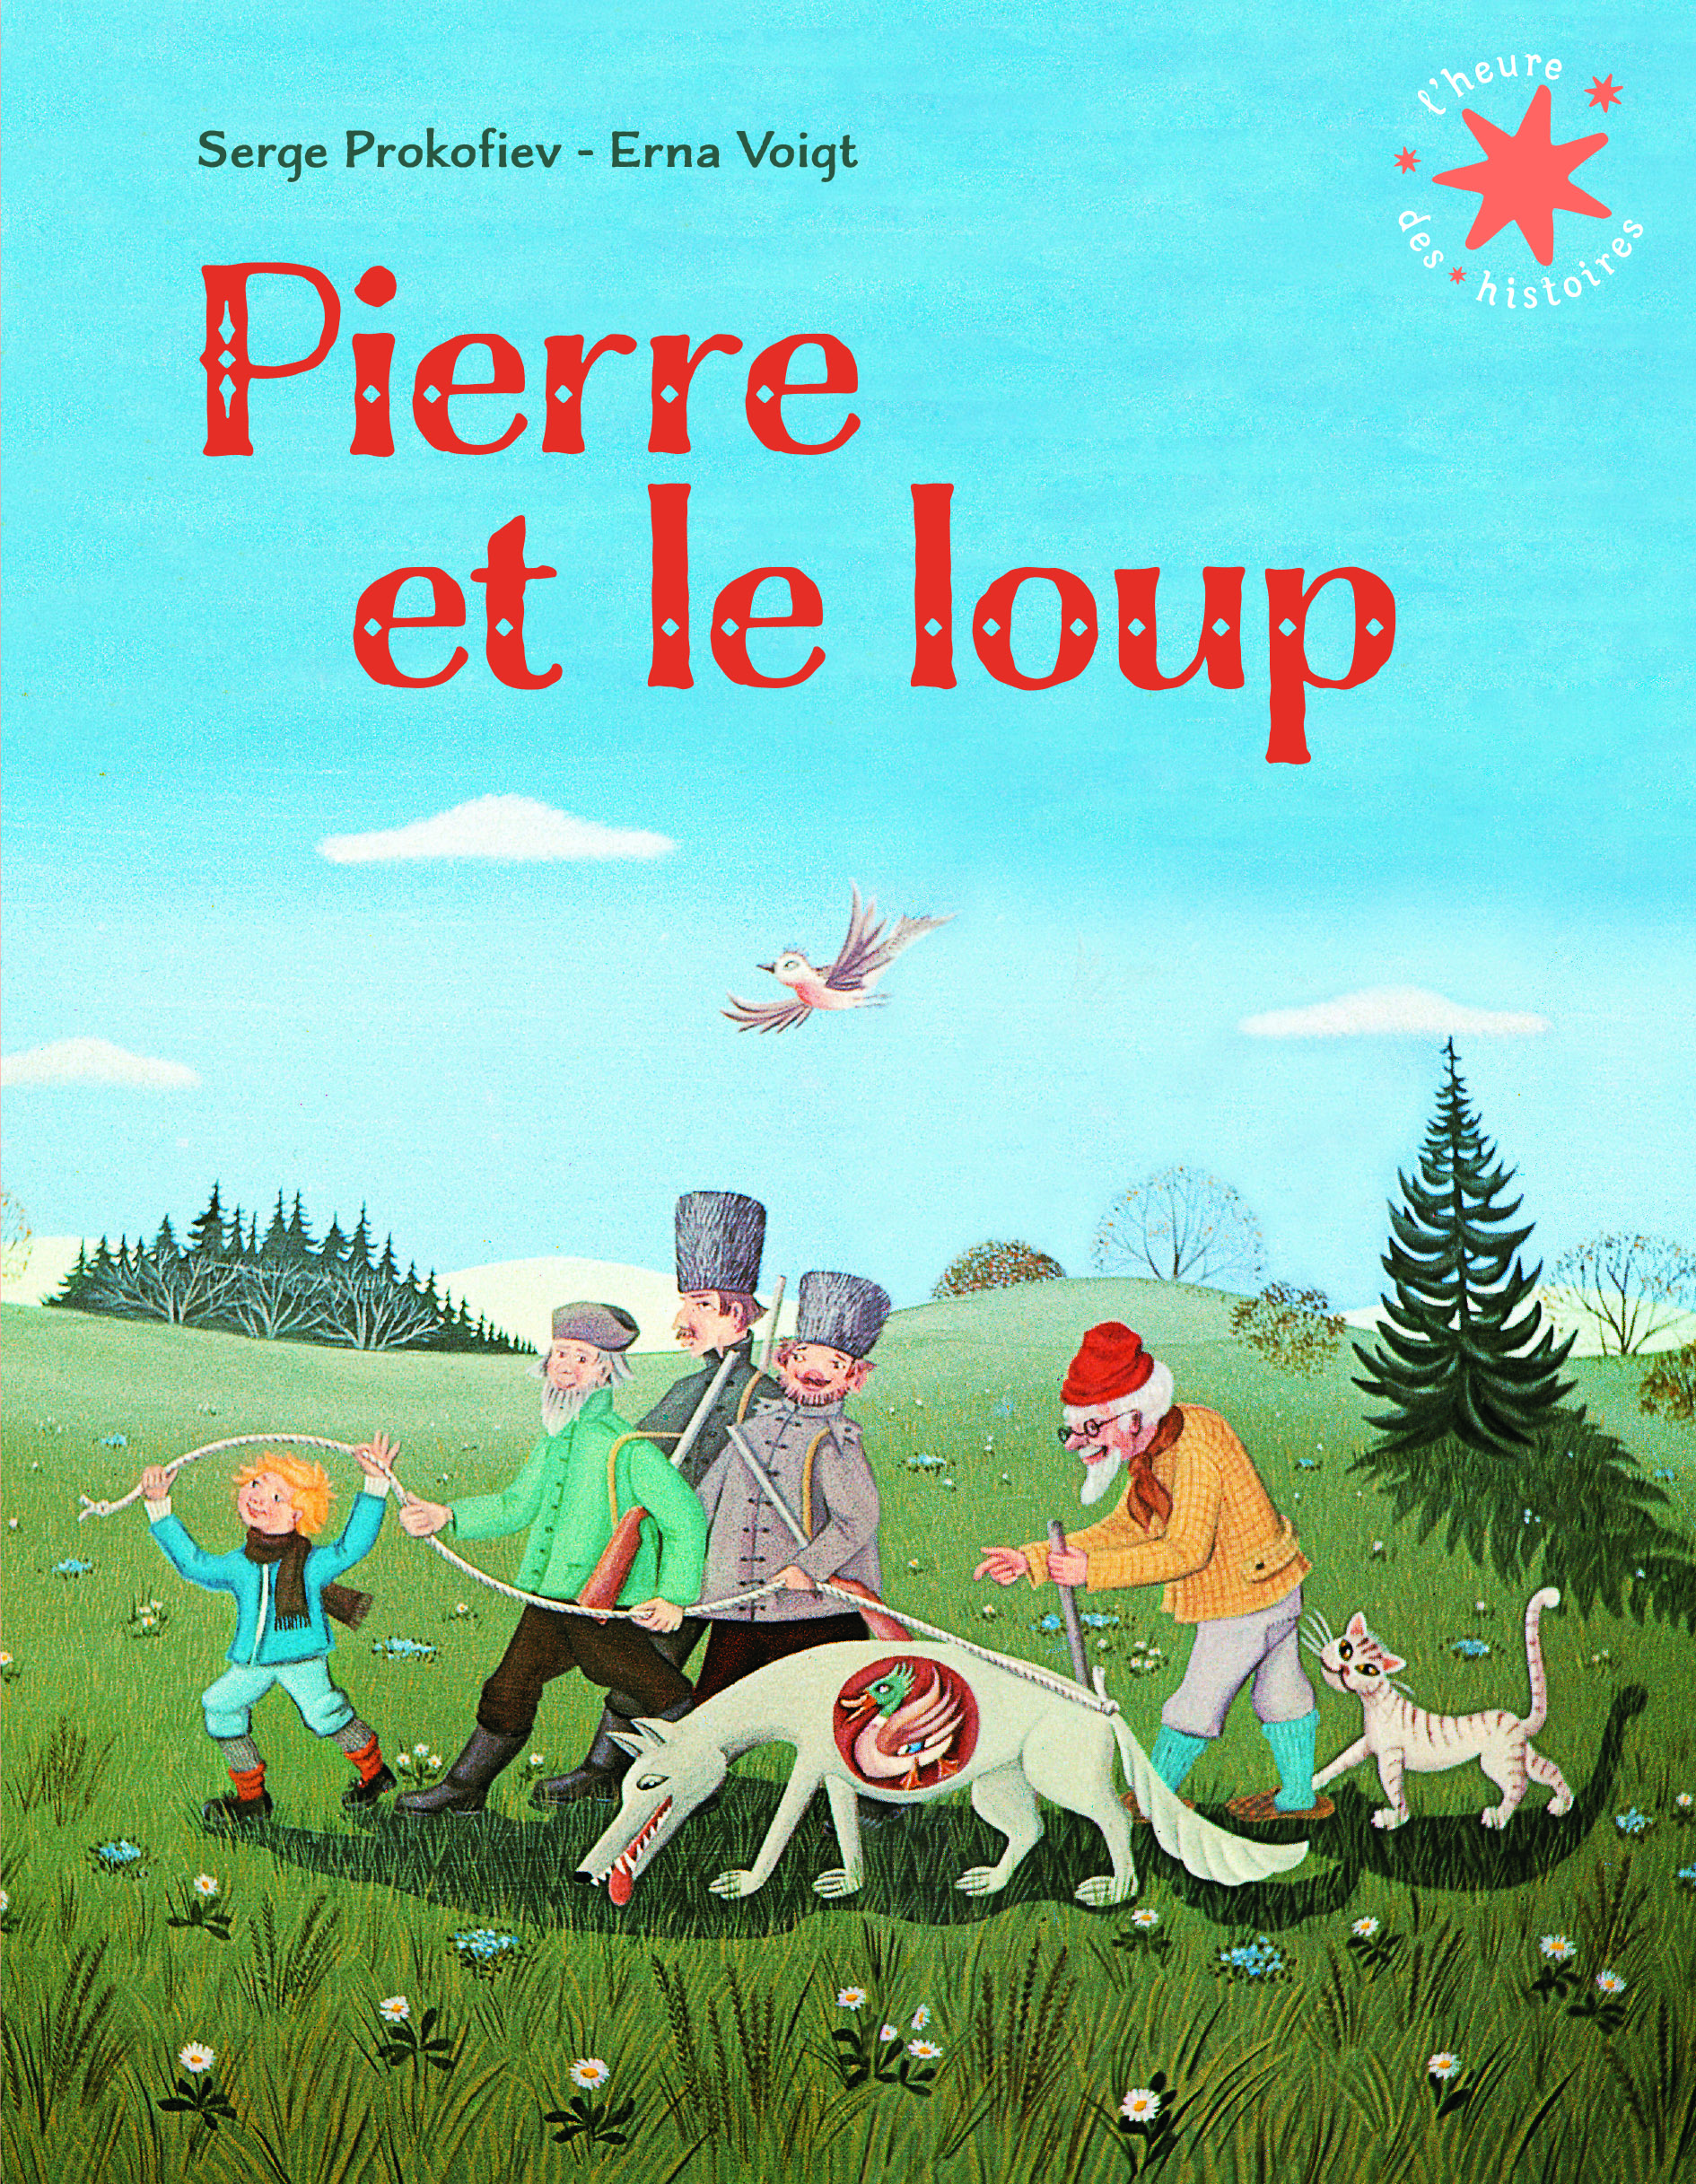 Pierre et le loup - Compilation by Various Artists